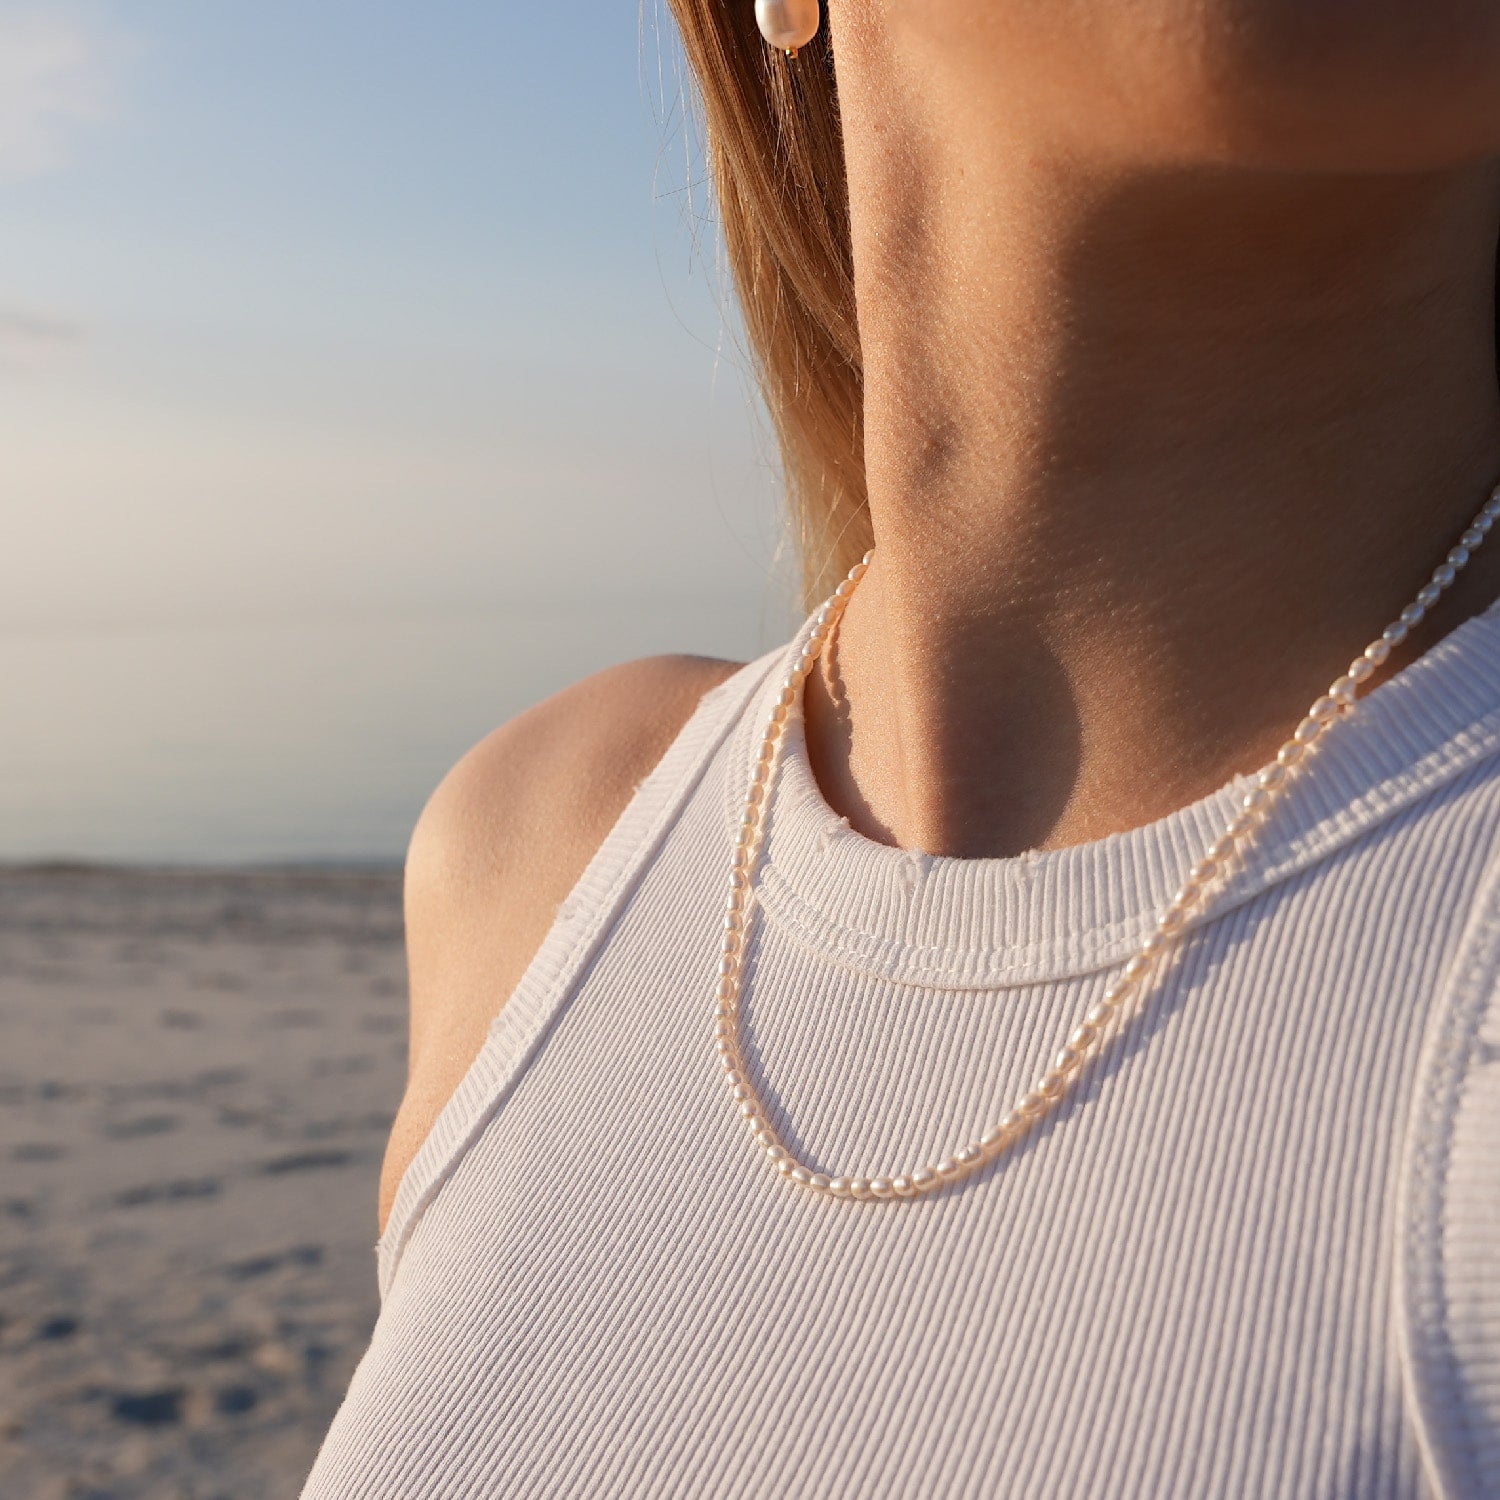 Perlenkette "Marina" - Gold